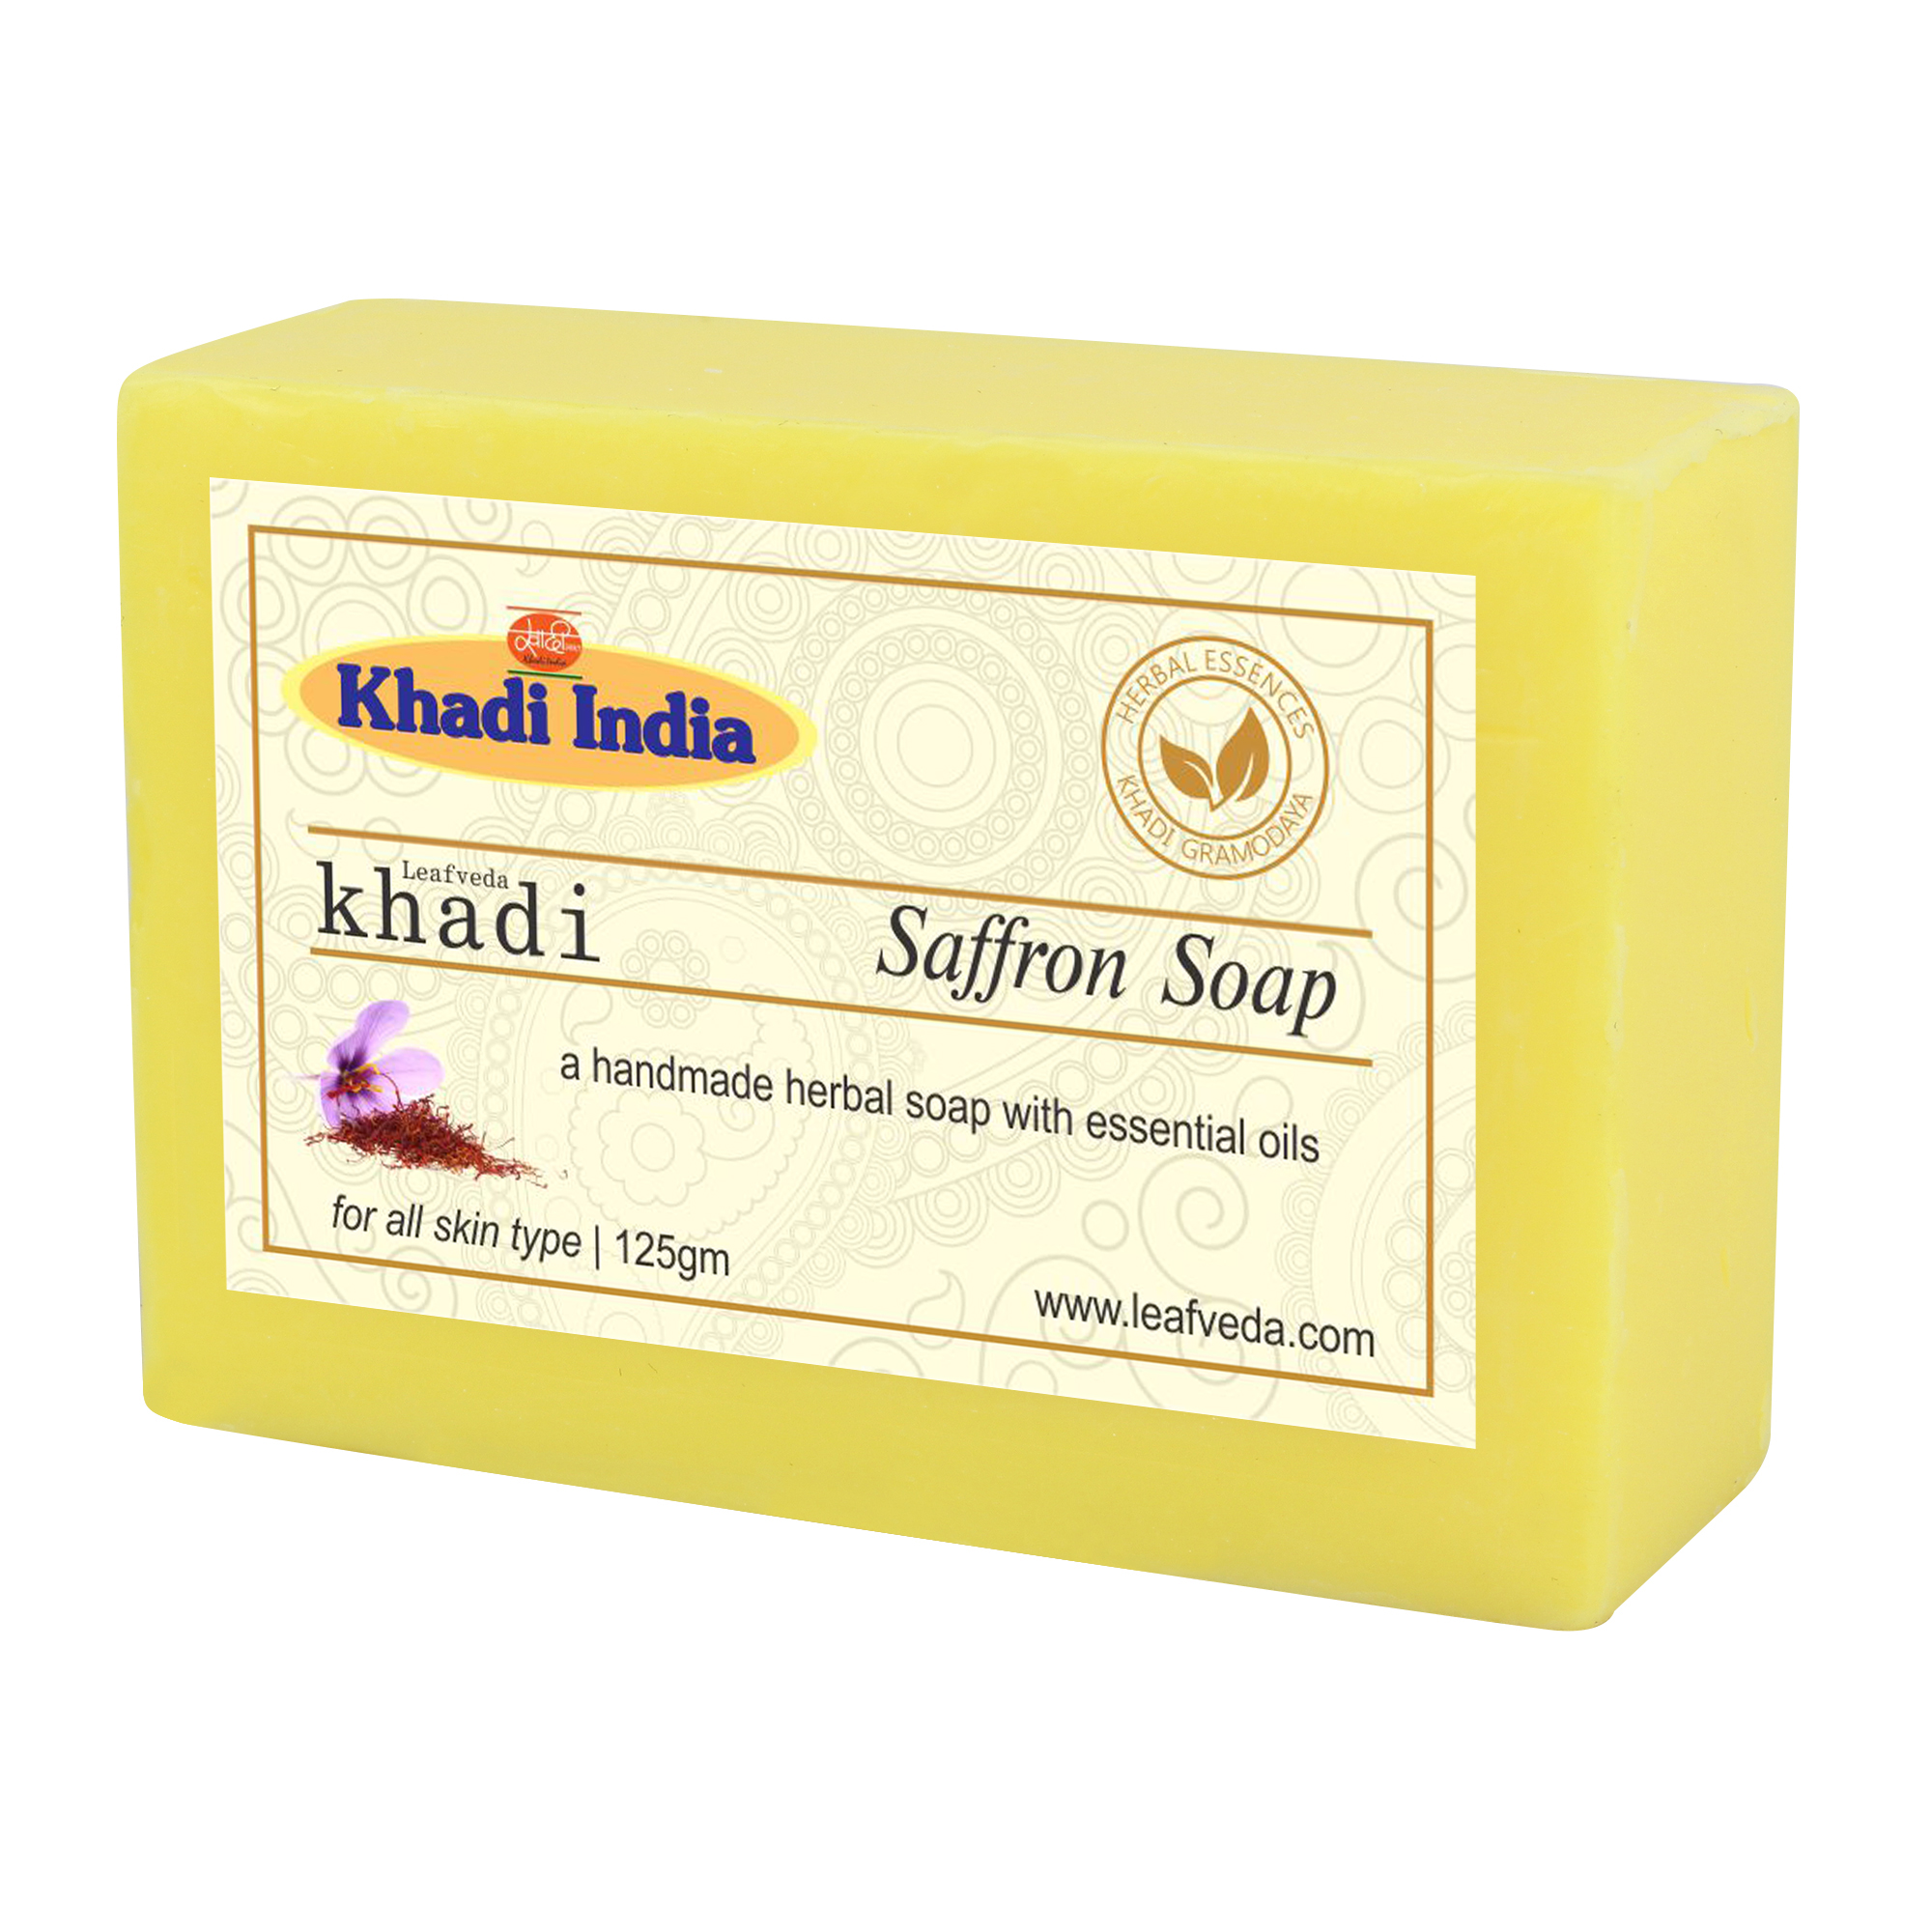 Buy Khadi Leafveda Saffron Soap at Best Price Online